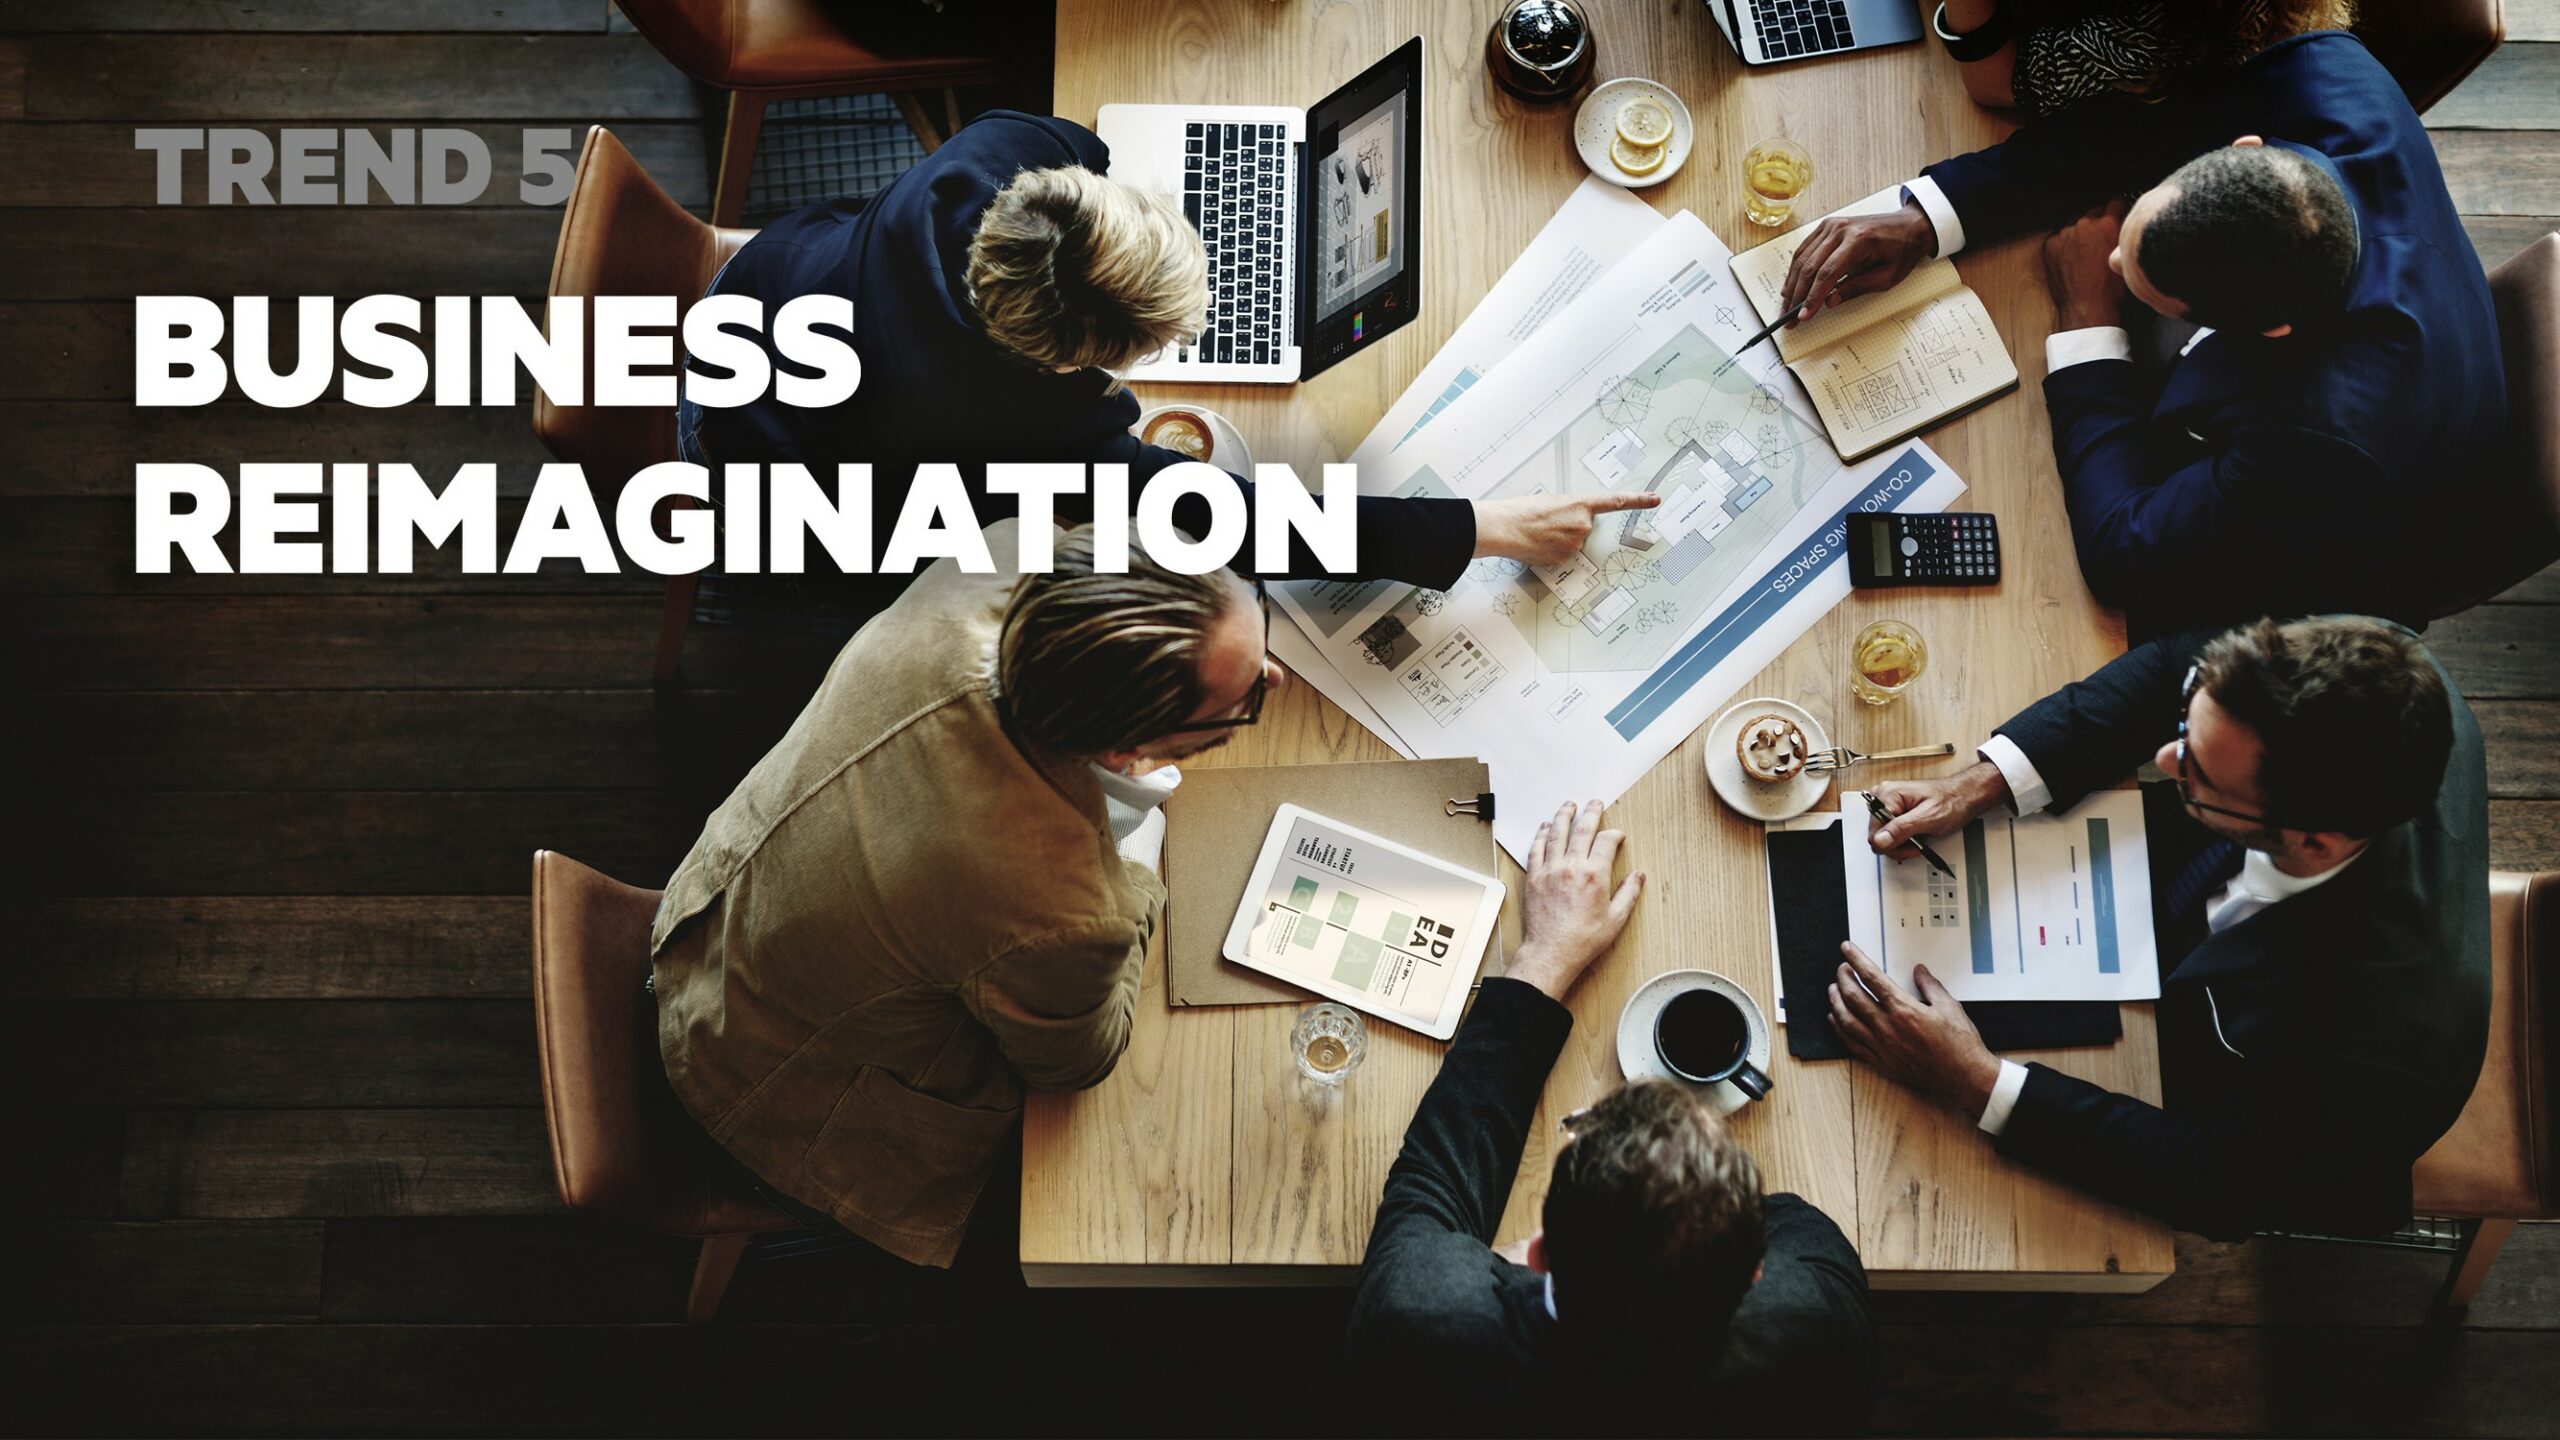 Business reimagination